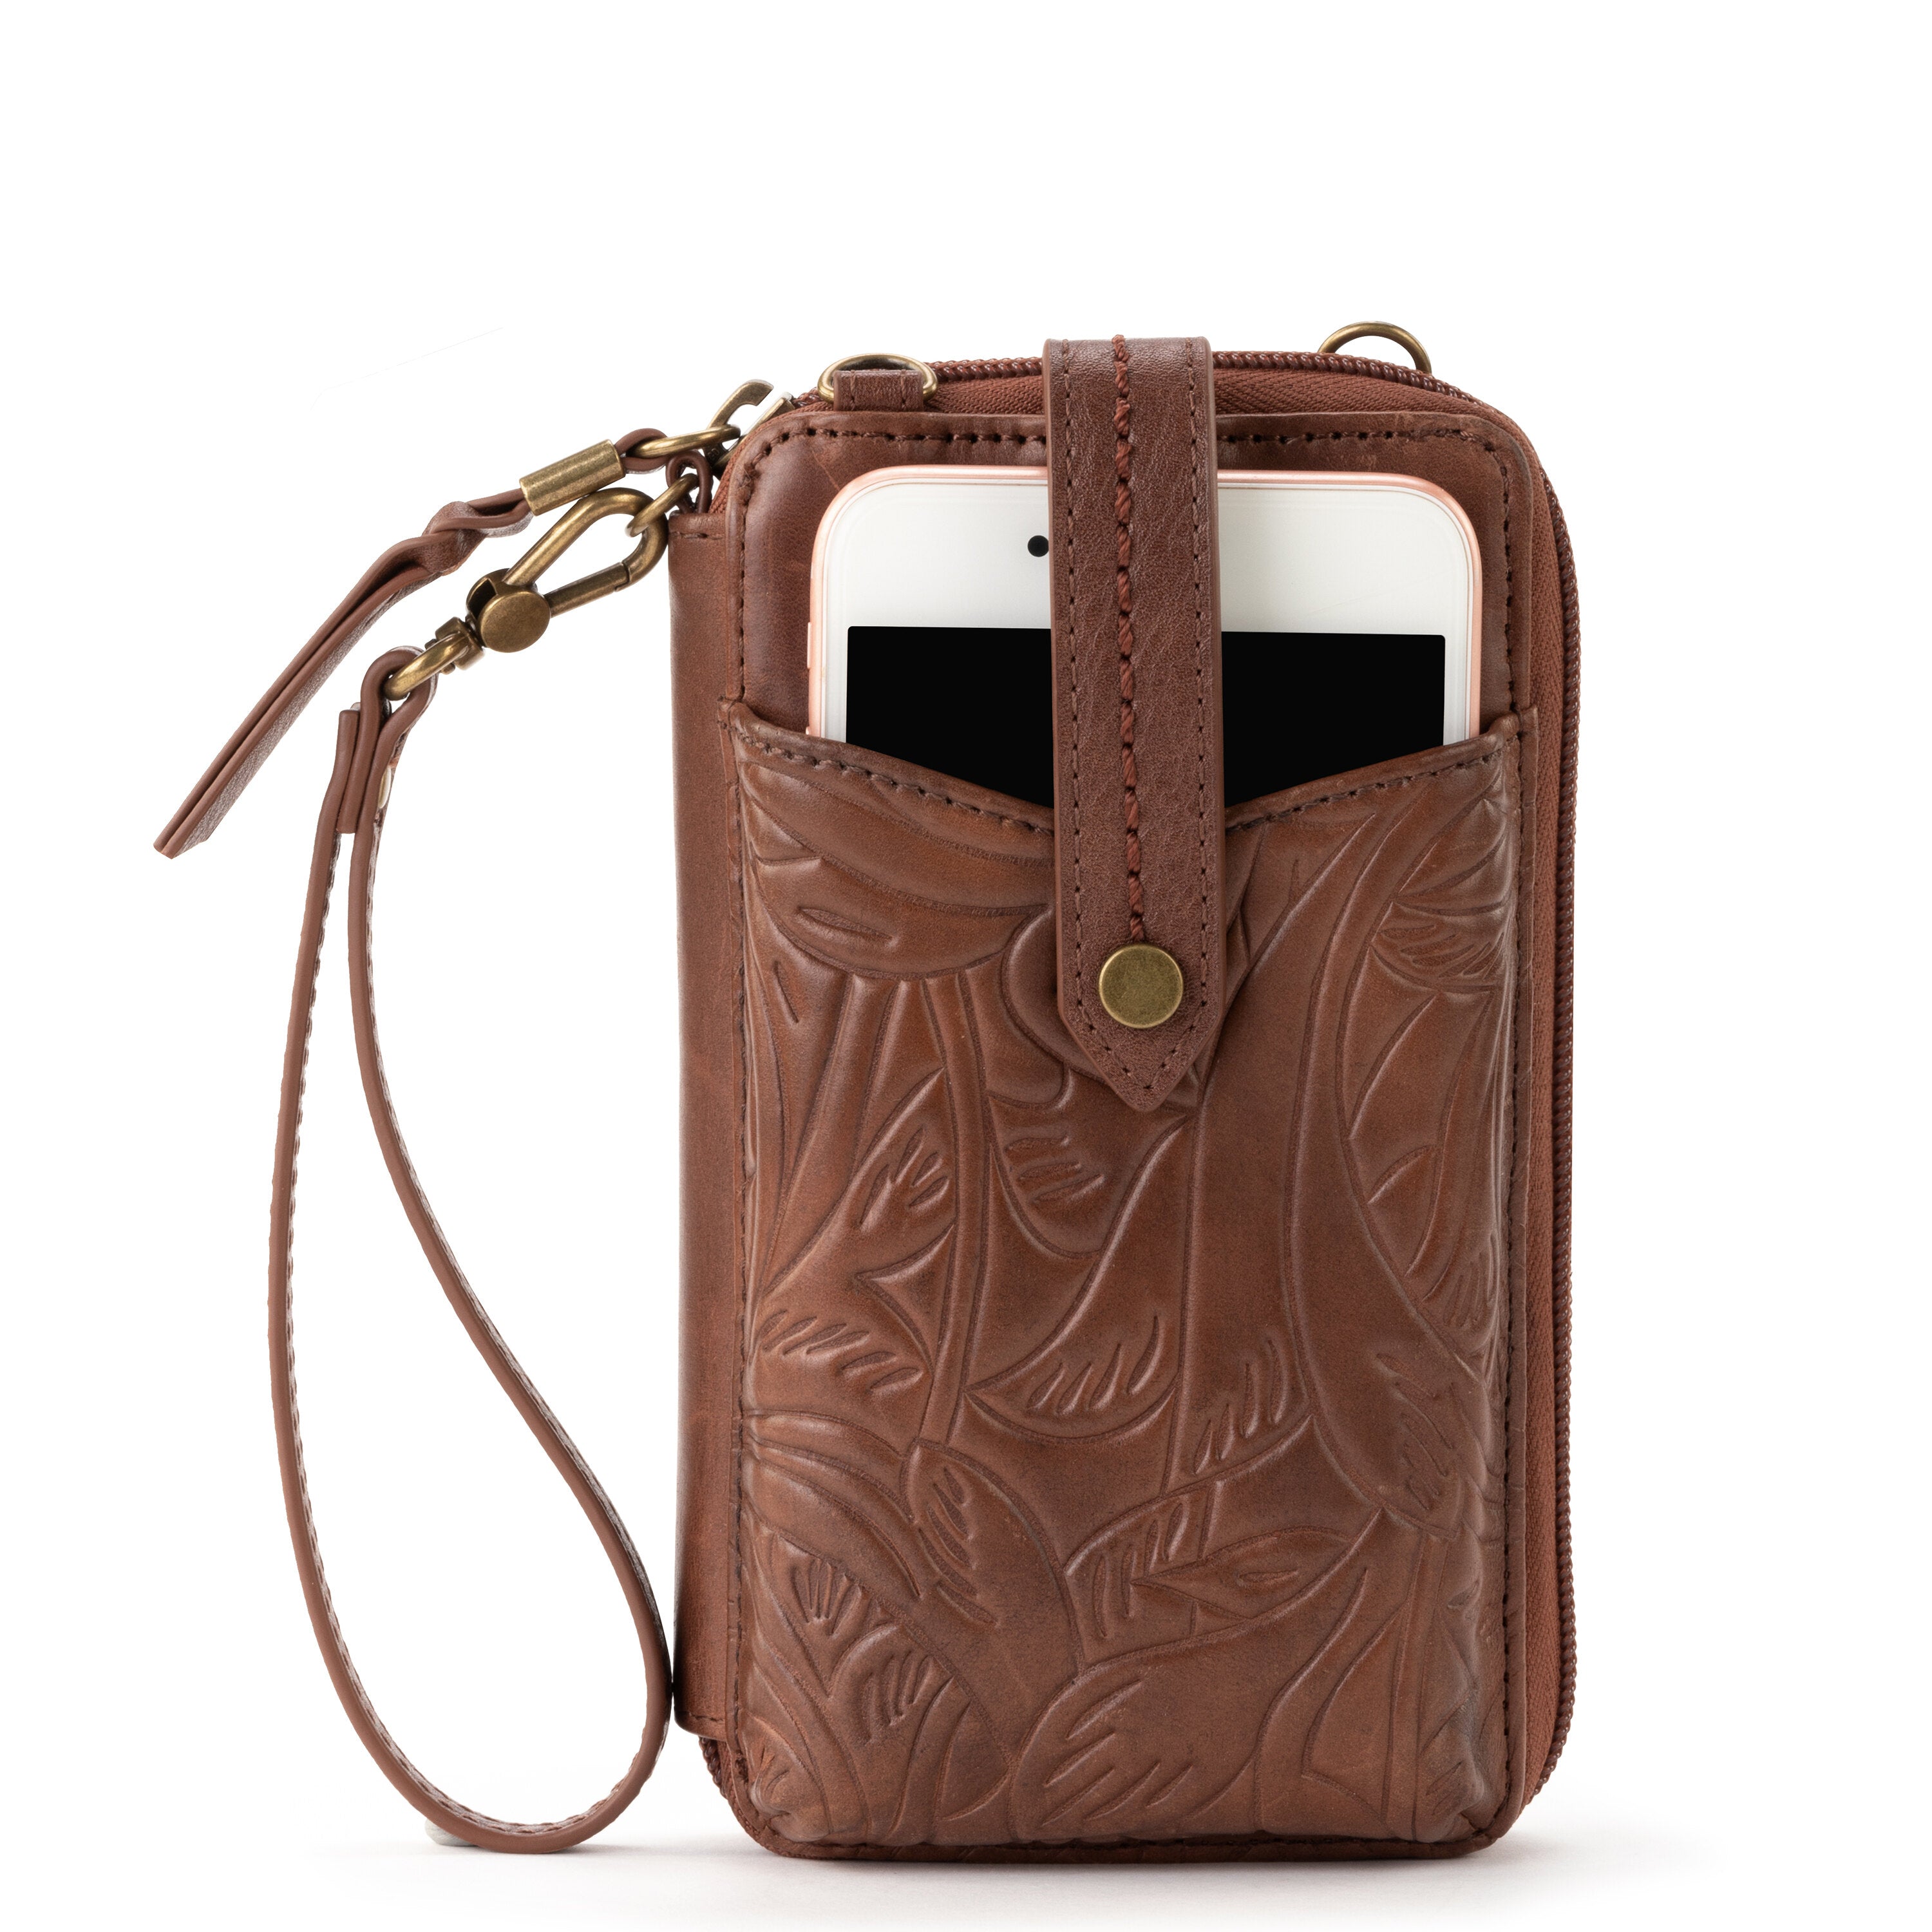 The Sak Sequoia Leather Smartphone Flap Crossbody, Chestnut Floral Etch:  Handbags